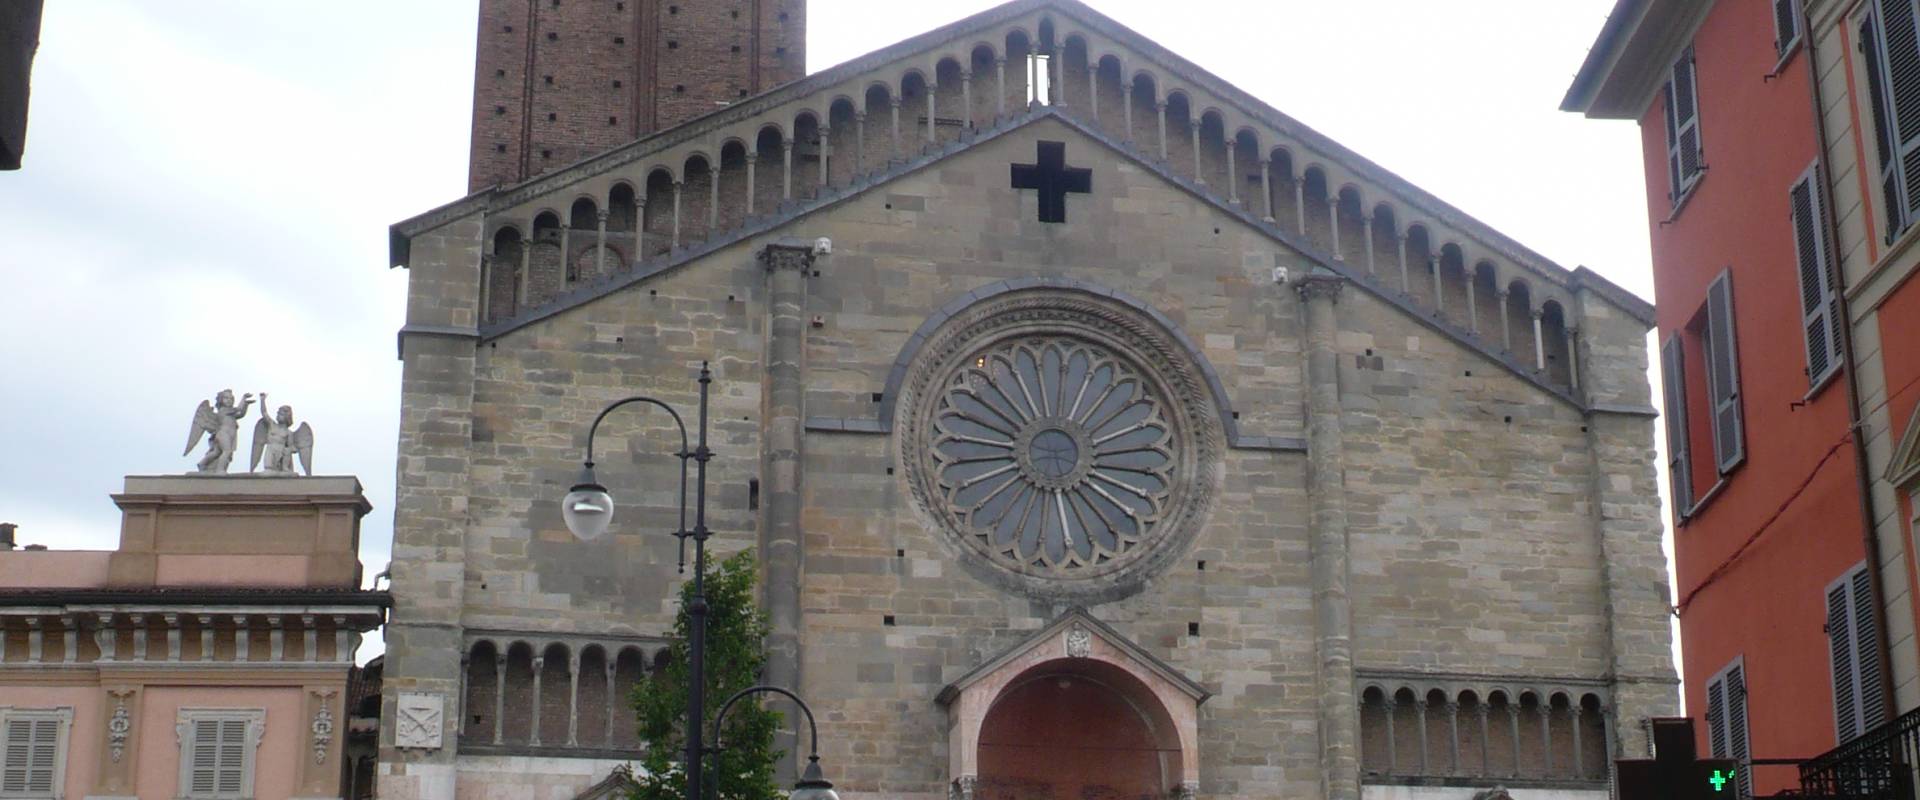 Duomo di Piacenza 1 foto di RatMan1234